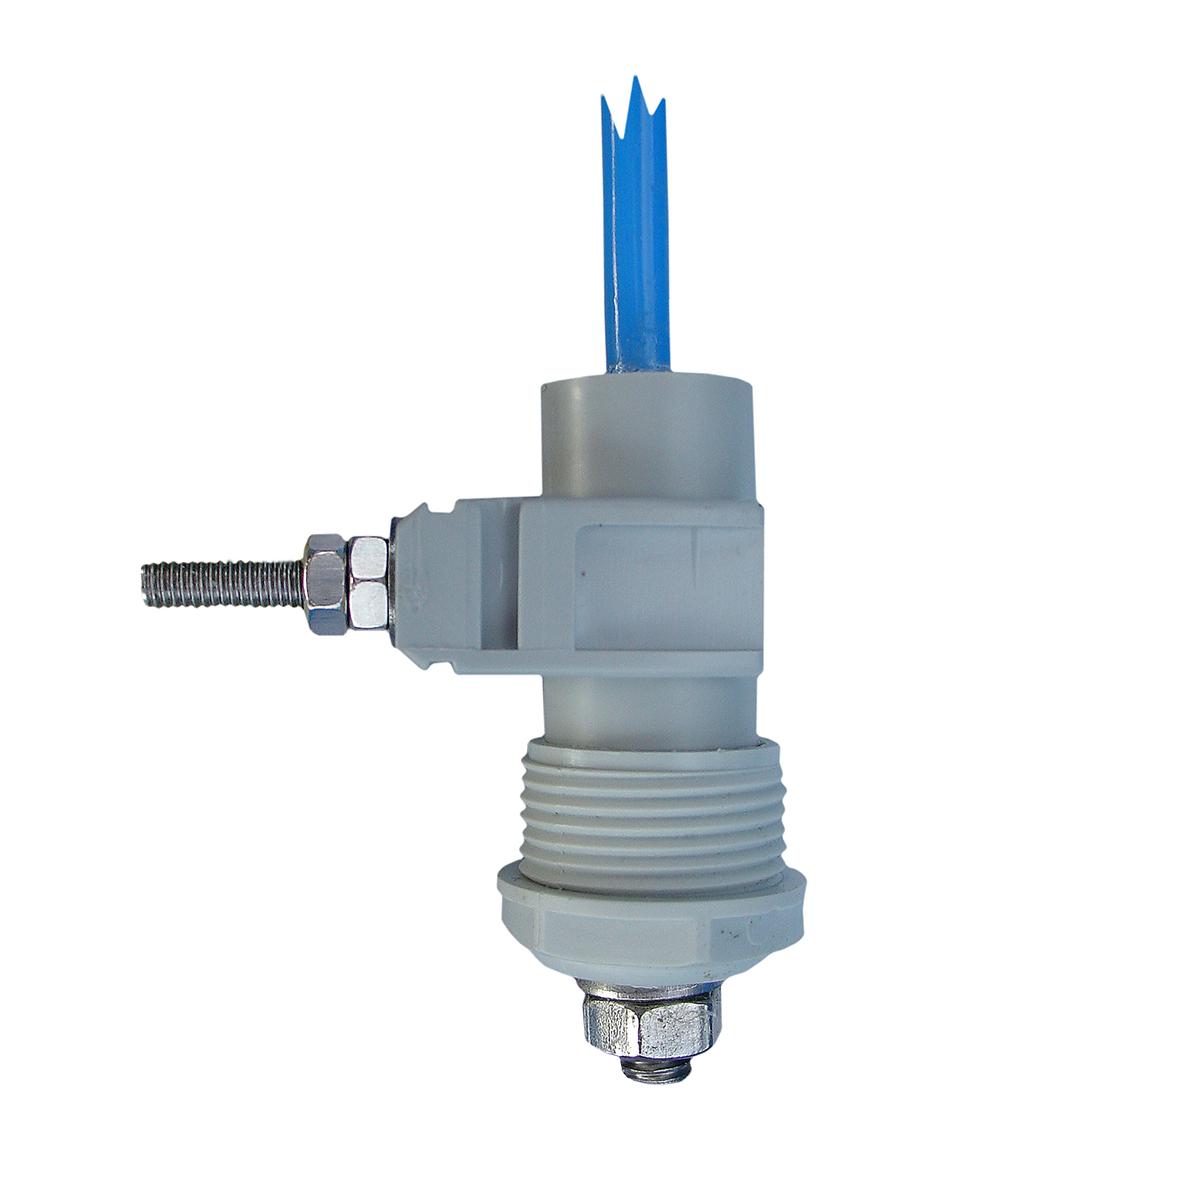 Galvanic water level sensor plastic/V4a, height adjustable, 10m cable Galvanic water level sensor plastic/V4a, height adjustable, 10m cable